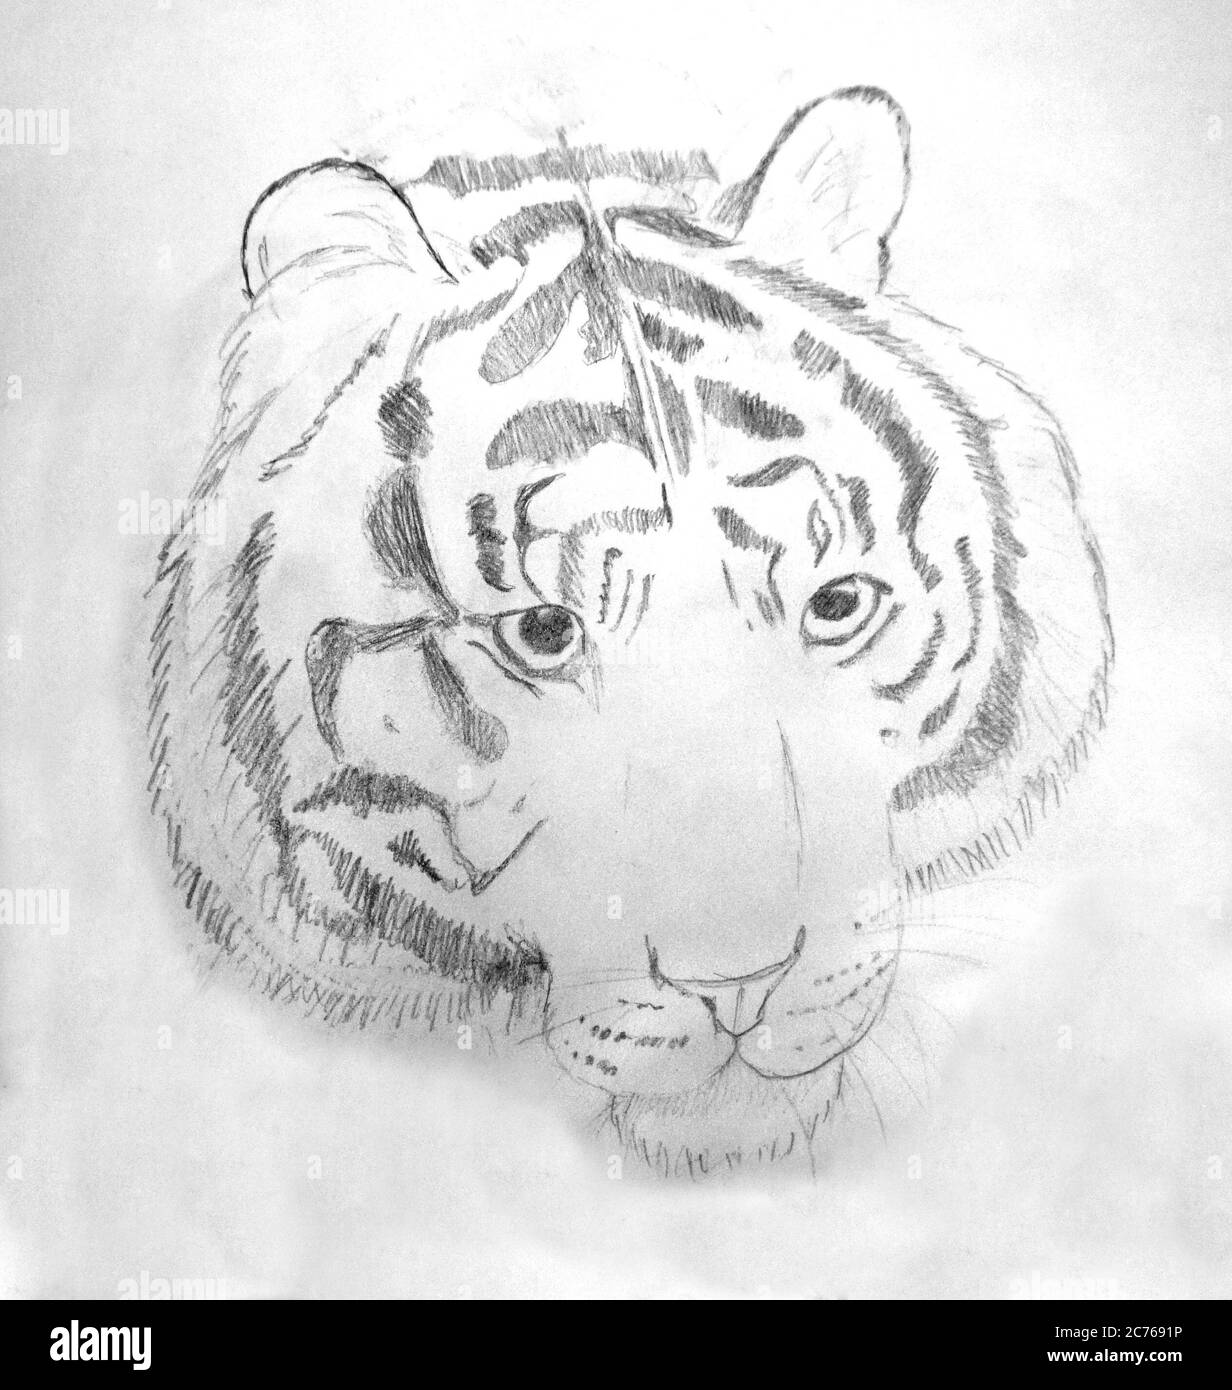 Dibujo a lápiz de un tigre en el Zoo de Londres Foto de stock